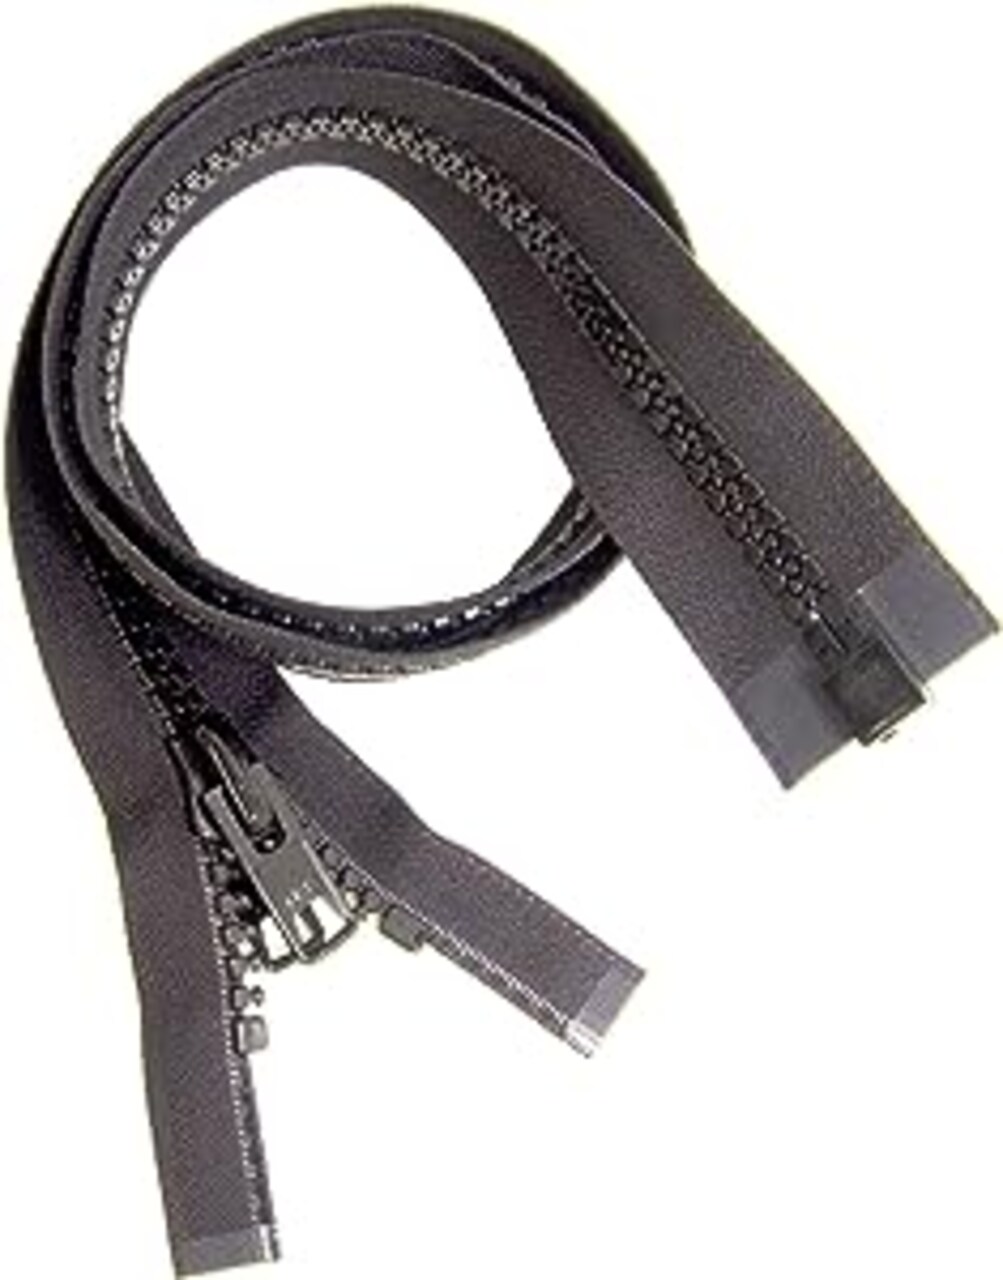 YKK Brand Zipper, Black #10 Separates at The Bottom, Marine Grade Metal Tab Slider, Heavy Duty (48&#x22; Inch)